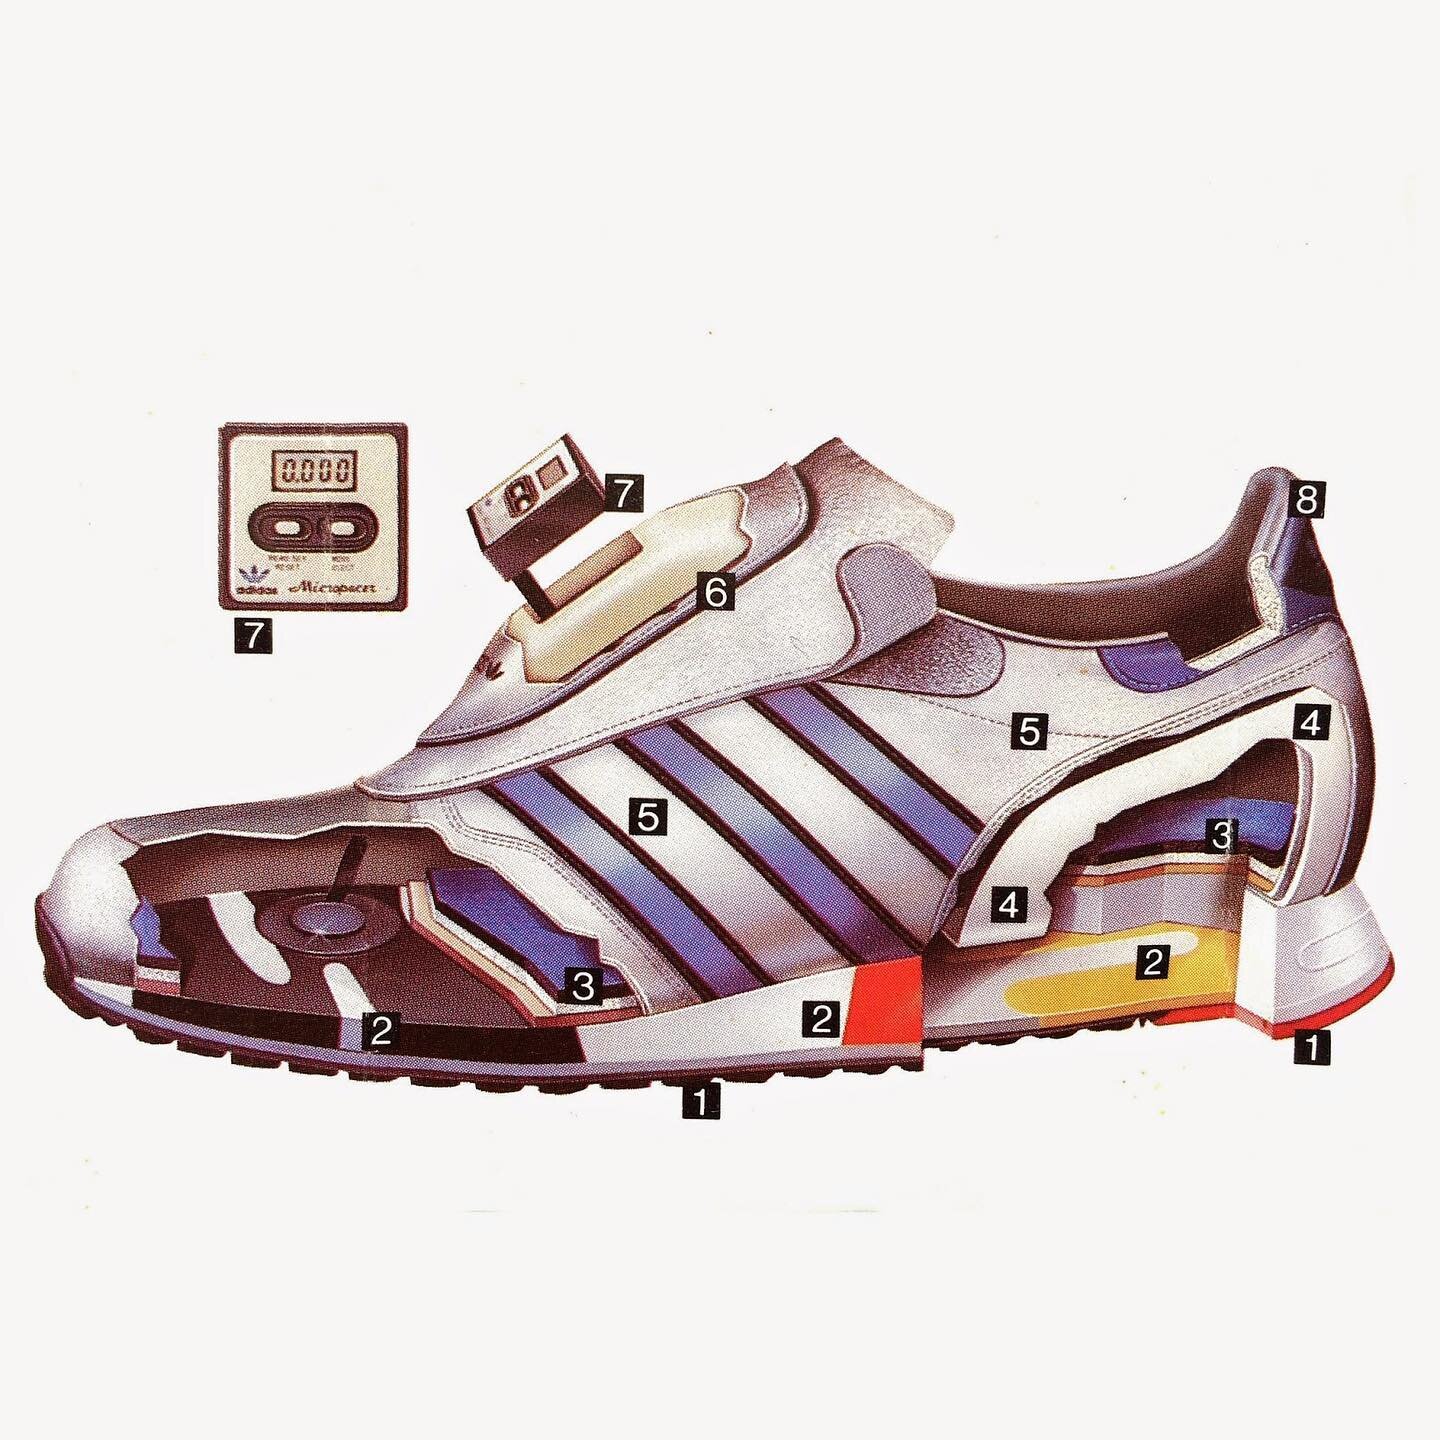 Une certaine idée du futur. Adidas micropacer, 1985.
.
.
.
.
#adidas #micropacer #retrofuture #sneakers